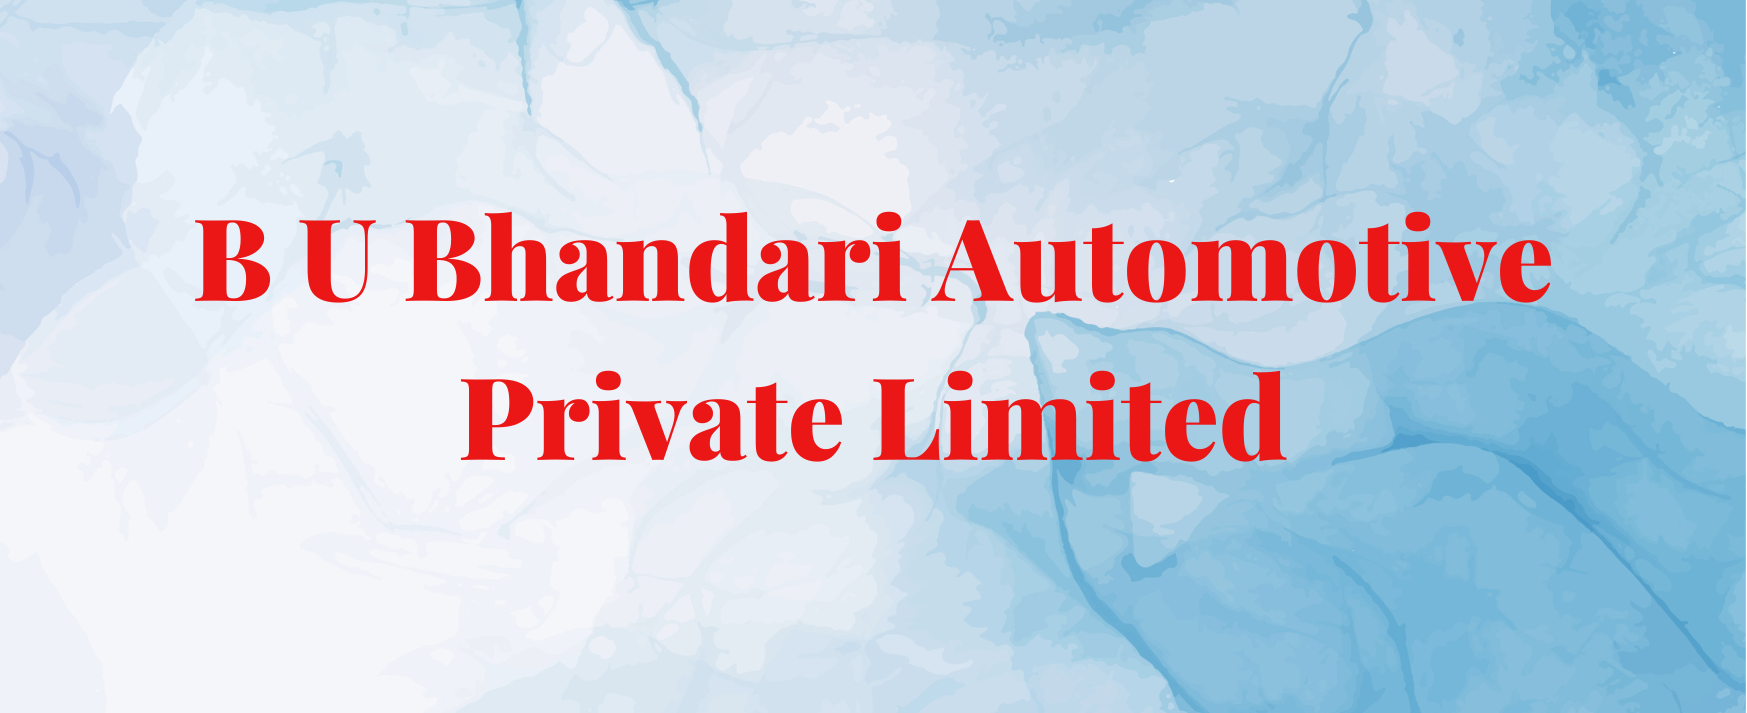 B U Bhandari Automotive Private Limited.